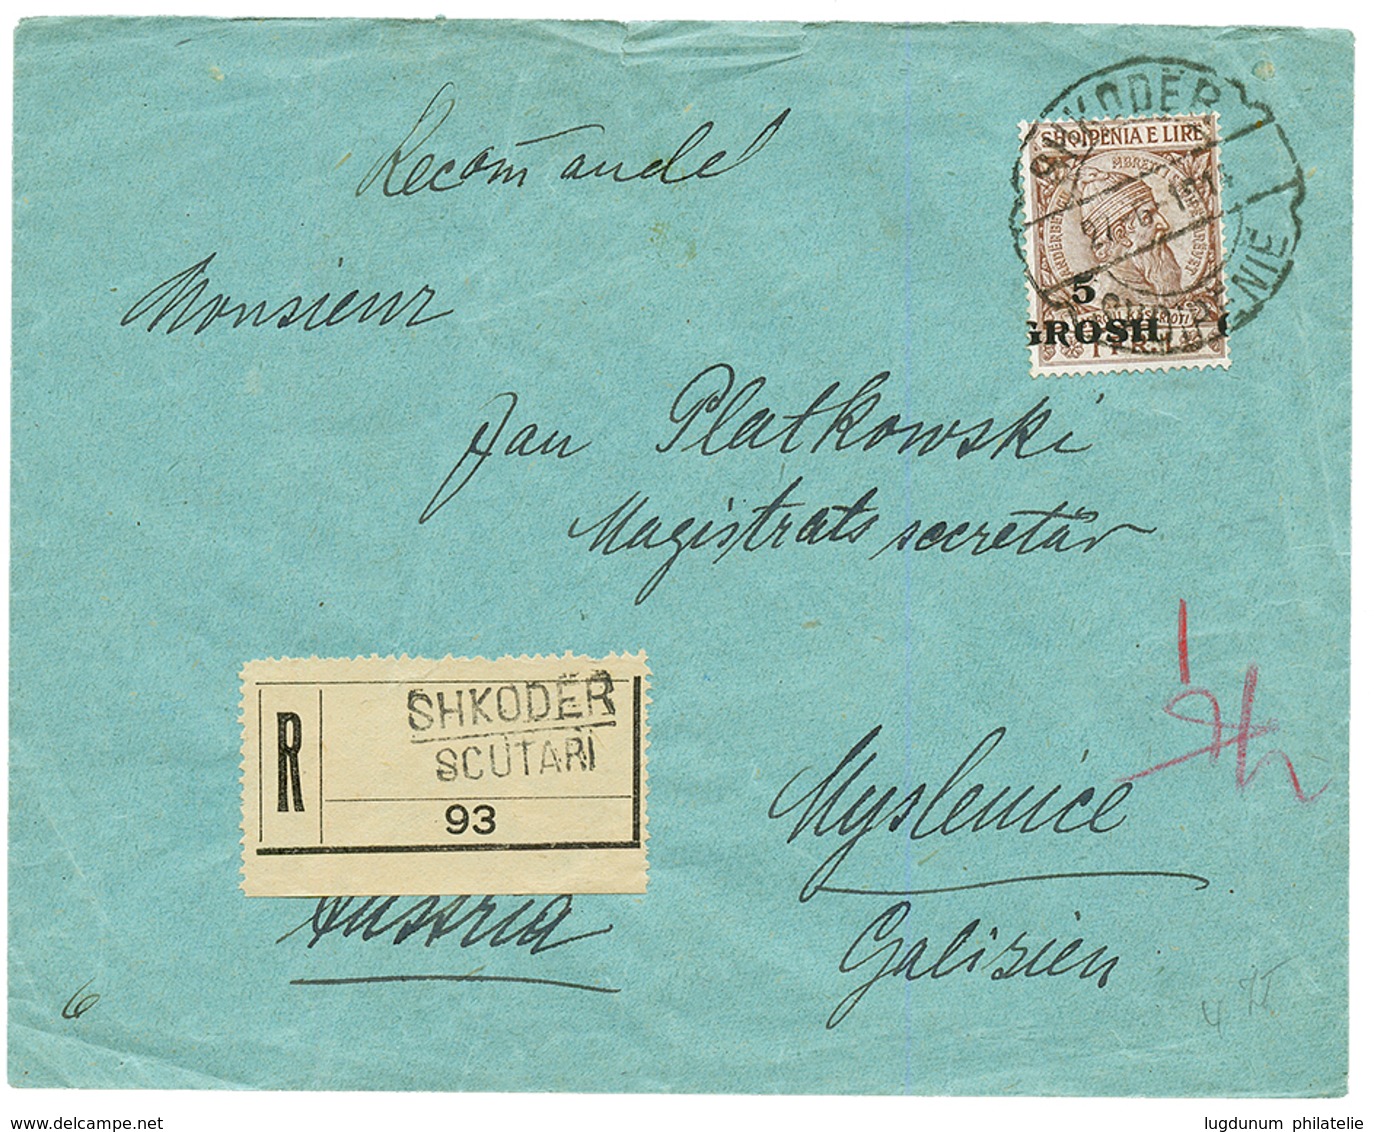 ALBANIA : 1914 5g On 1FR On REGISTERED Envelope From SCUTARI To AUSTRIA. Scarce. Vvf. - Albania